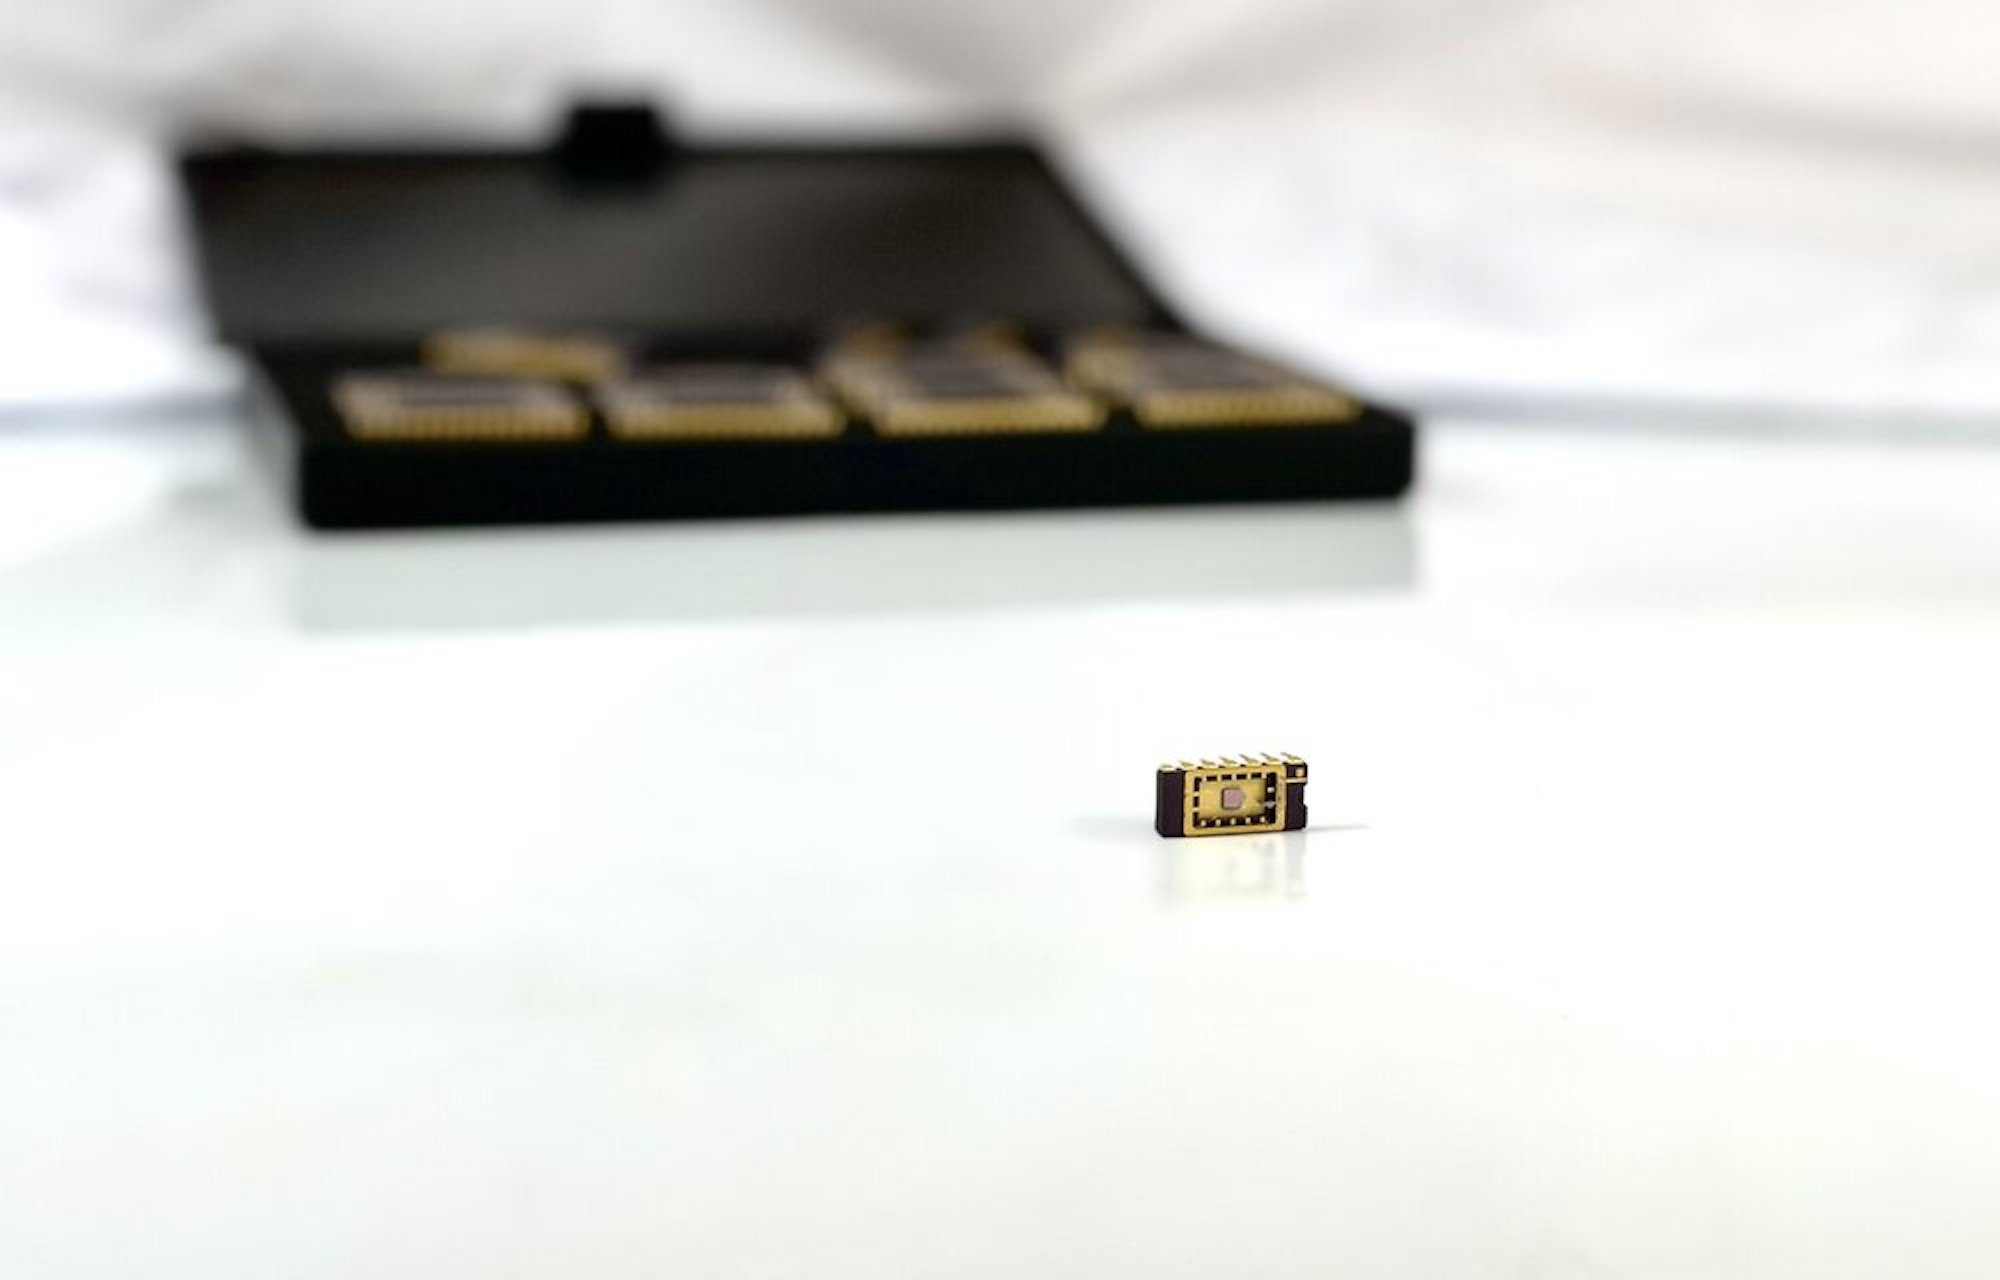 An energy harvesting chip prototype.